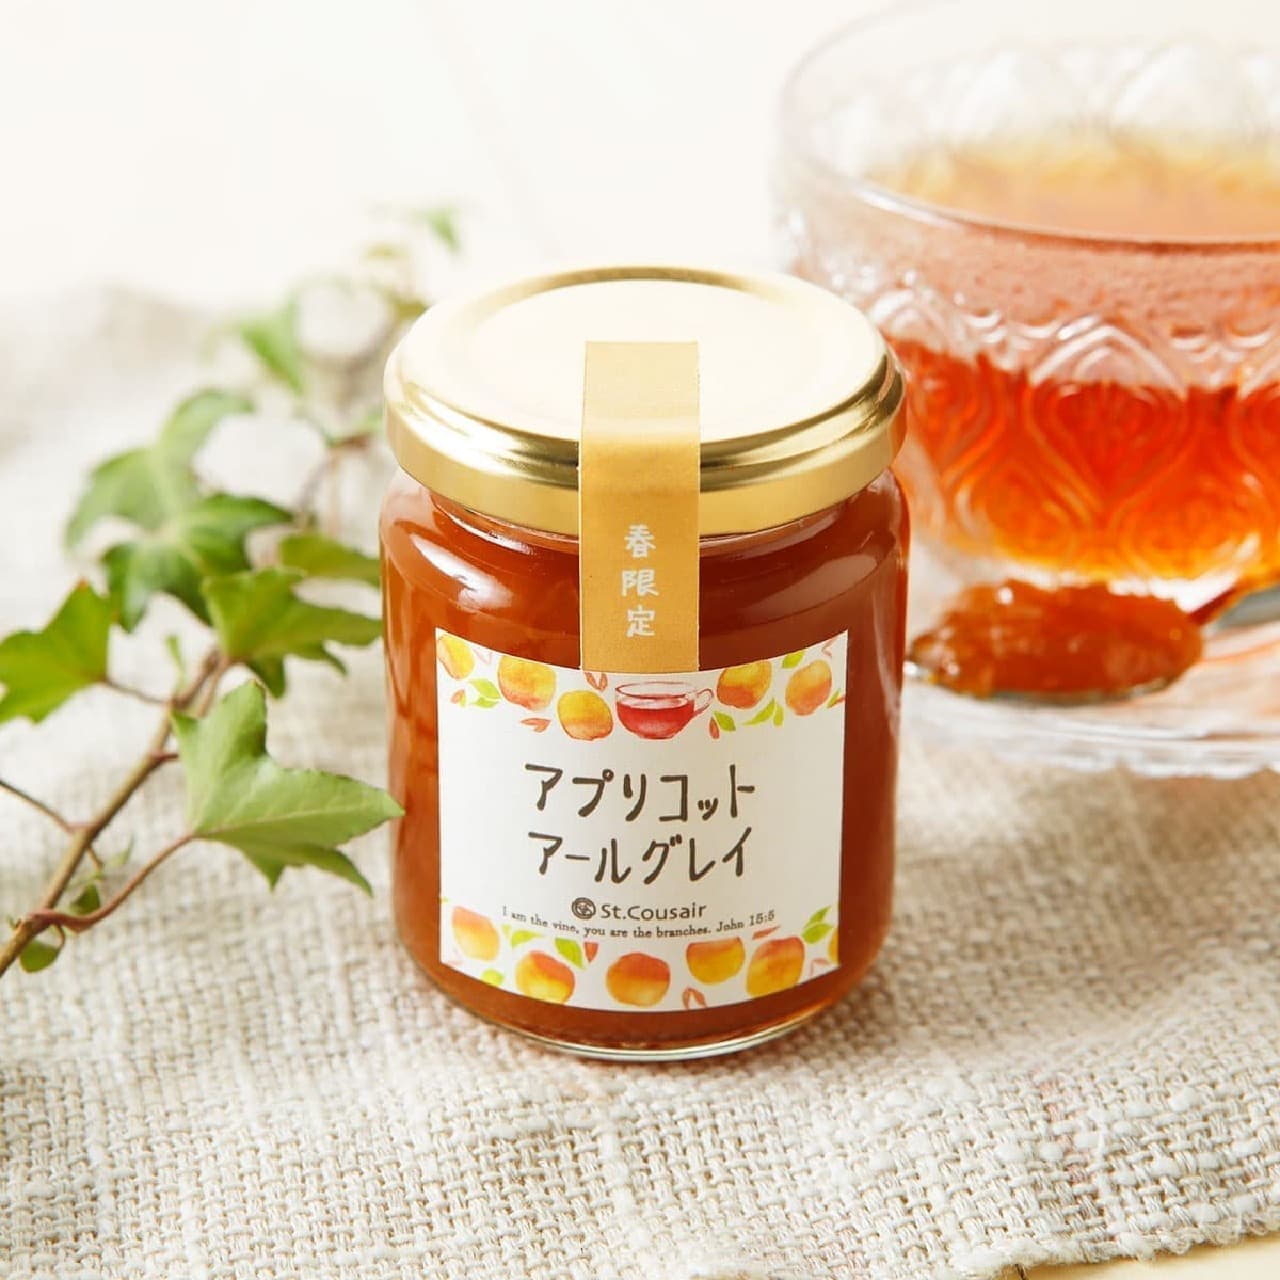 Sankuzeru Spring Limited Jam "Apricot Earl Gray"